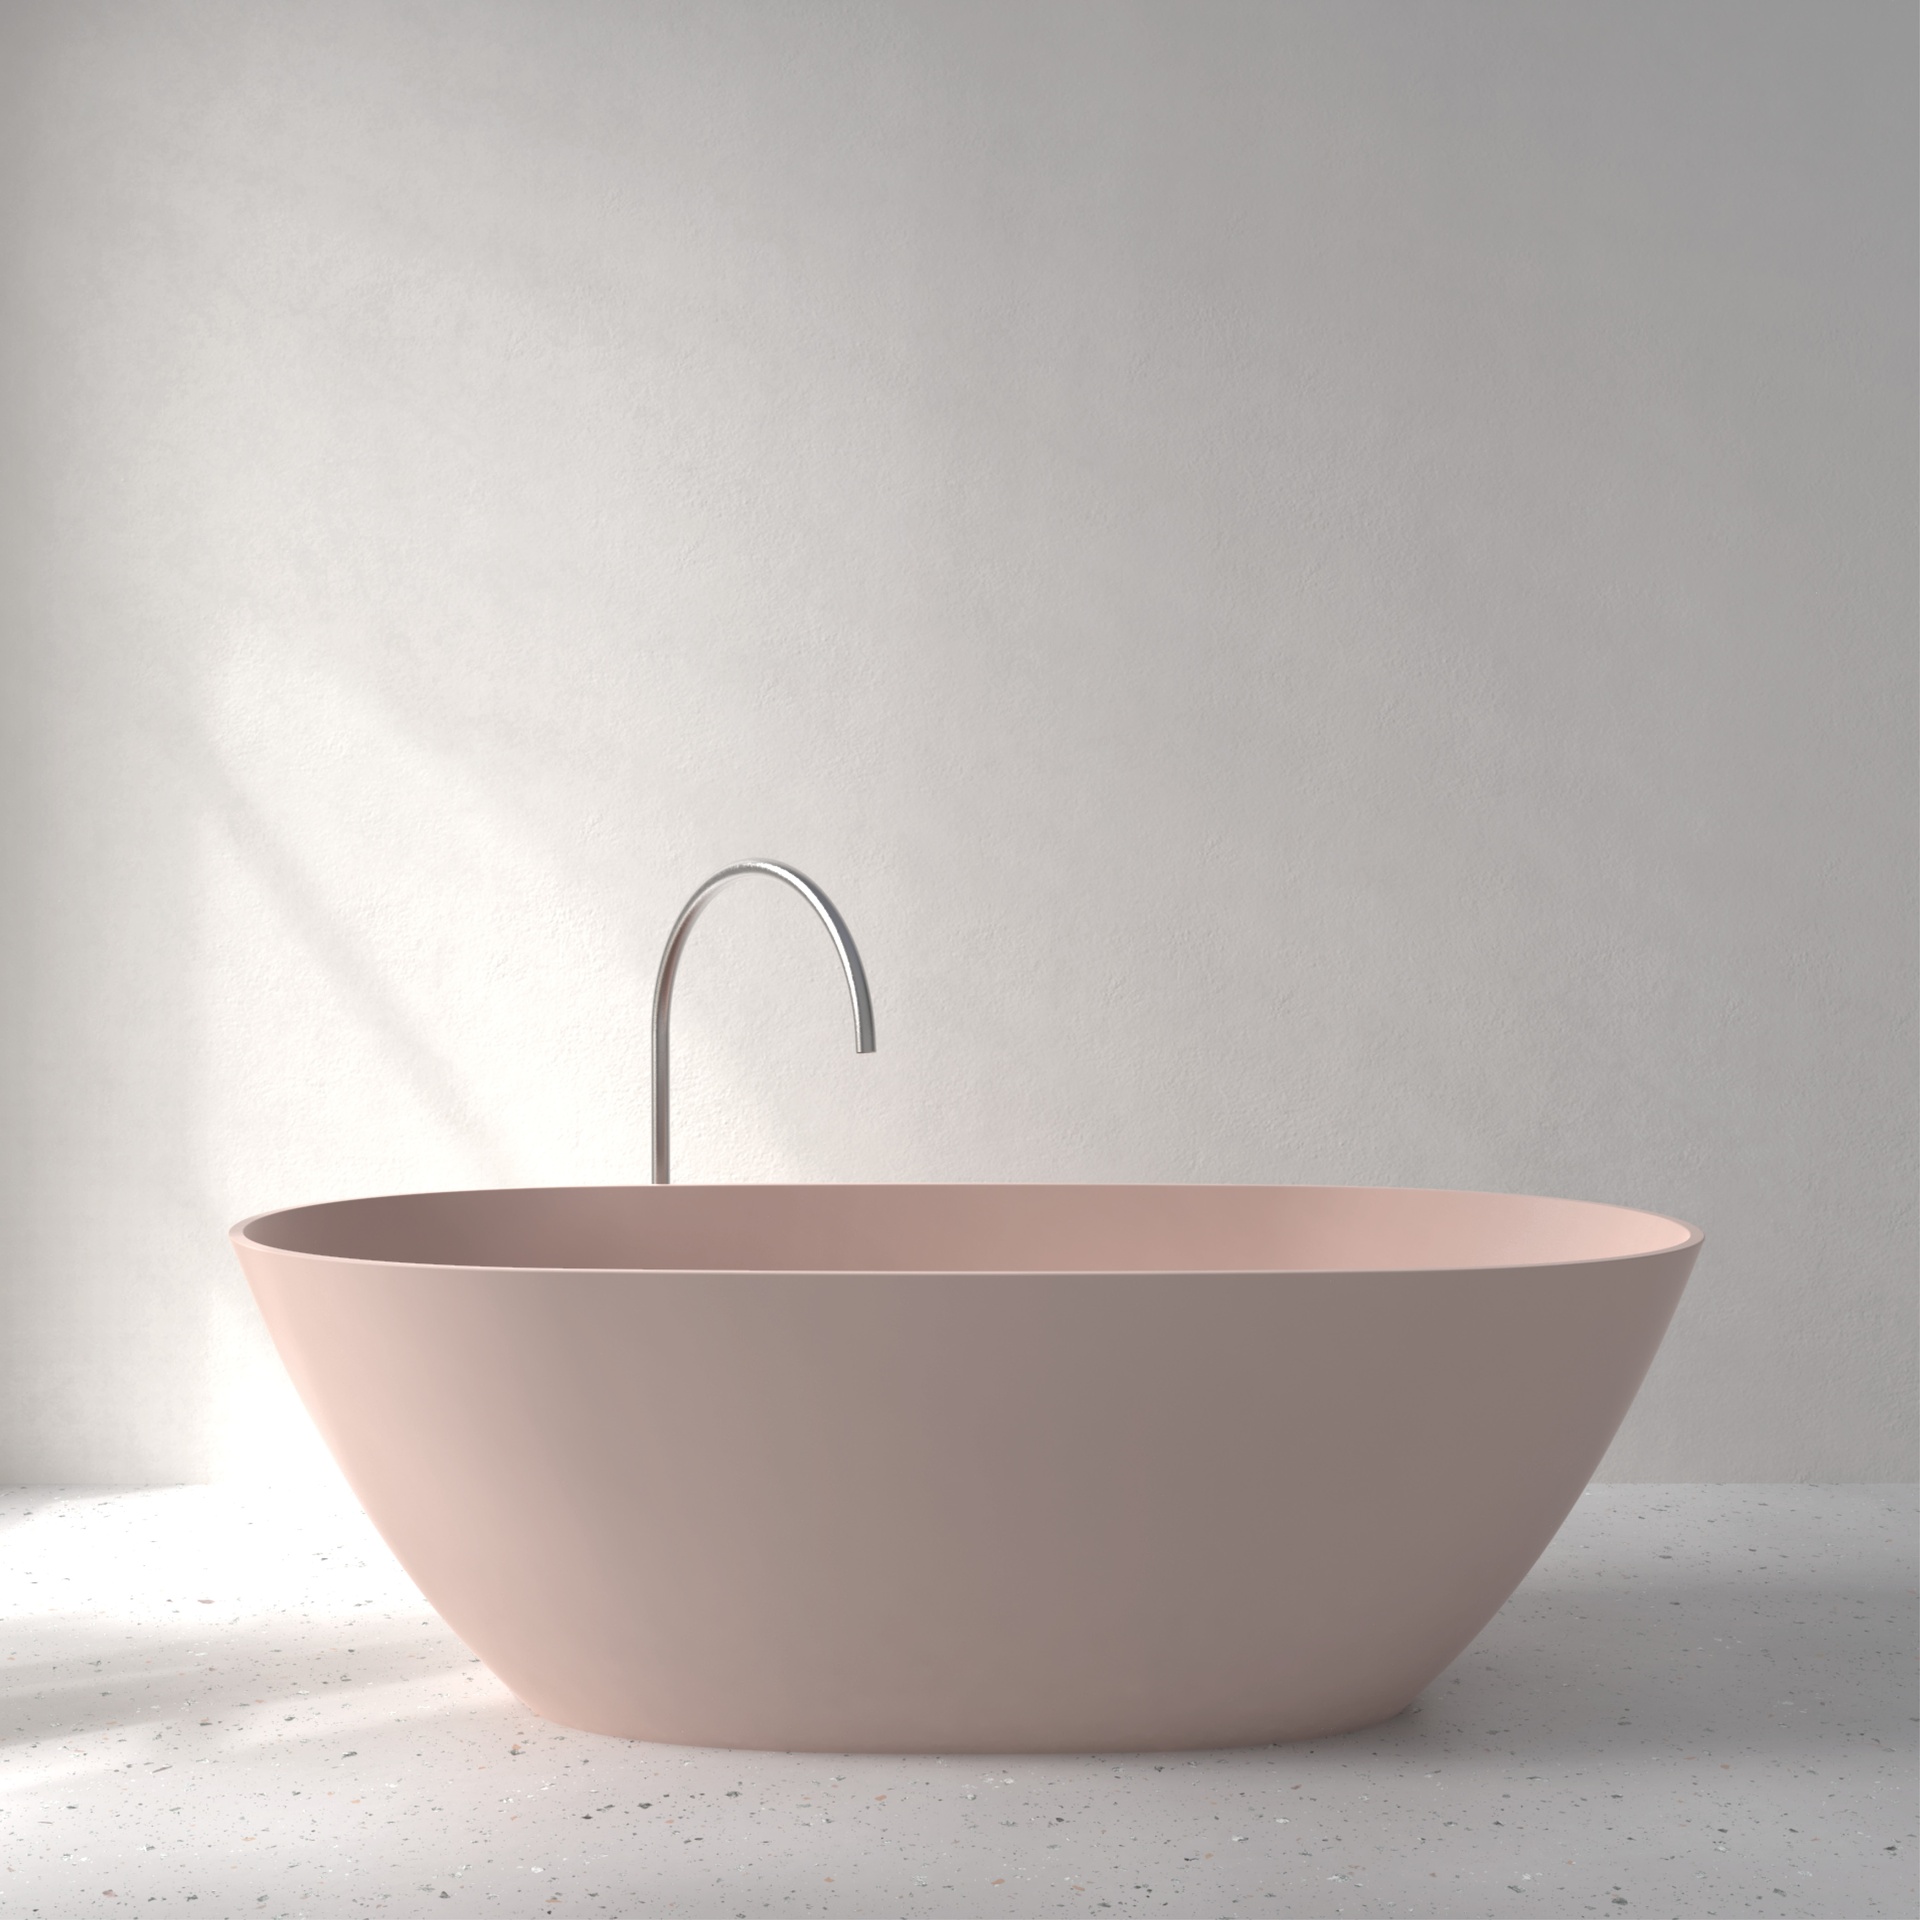 [FMU04-PAROSE] Muse bath in Palette color (Almond Rose)